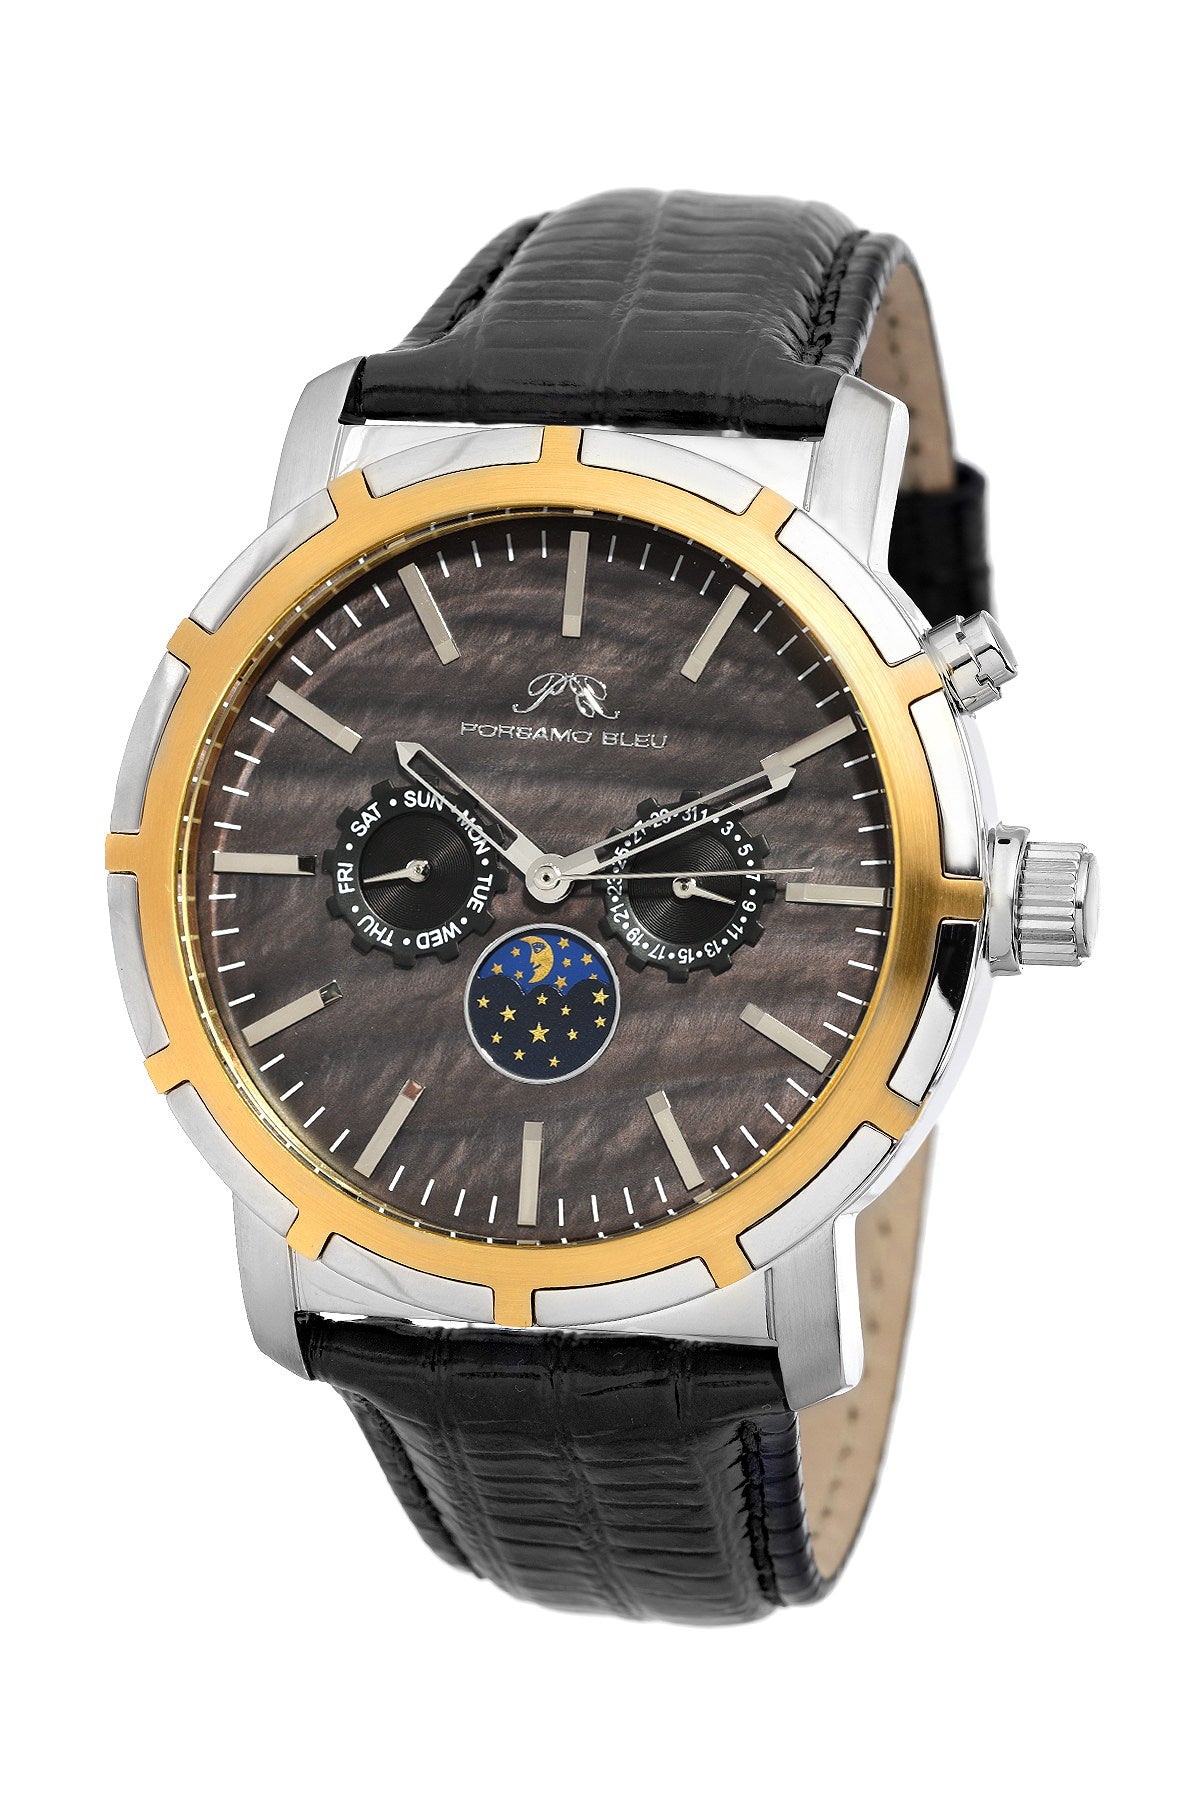 Porsamo Bleu NYC Moon luxury men's watch, genuine leather band, gold, silver, black 057DNYL